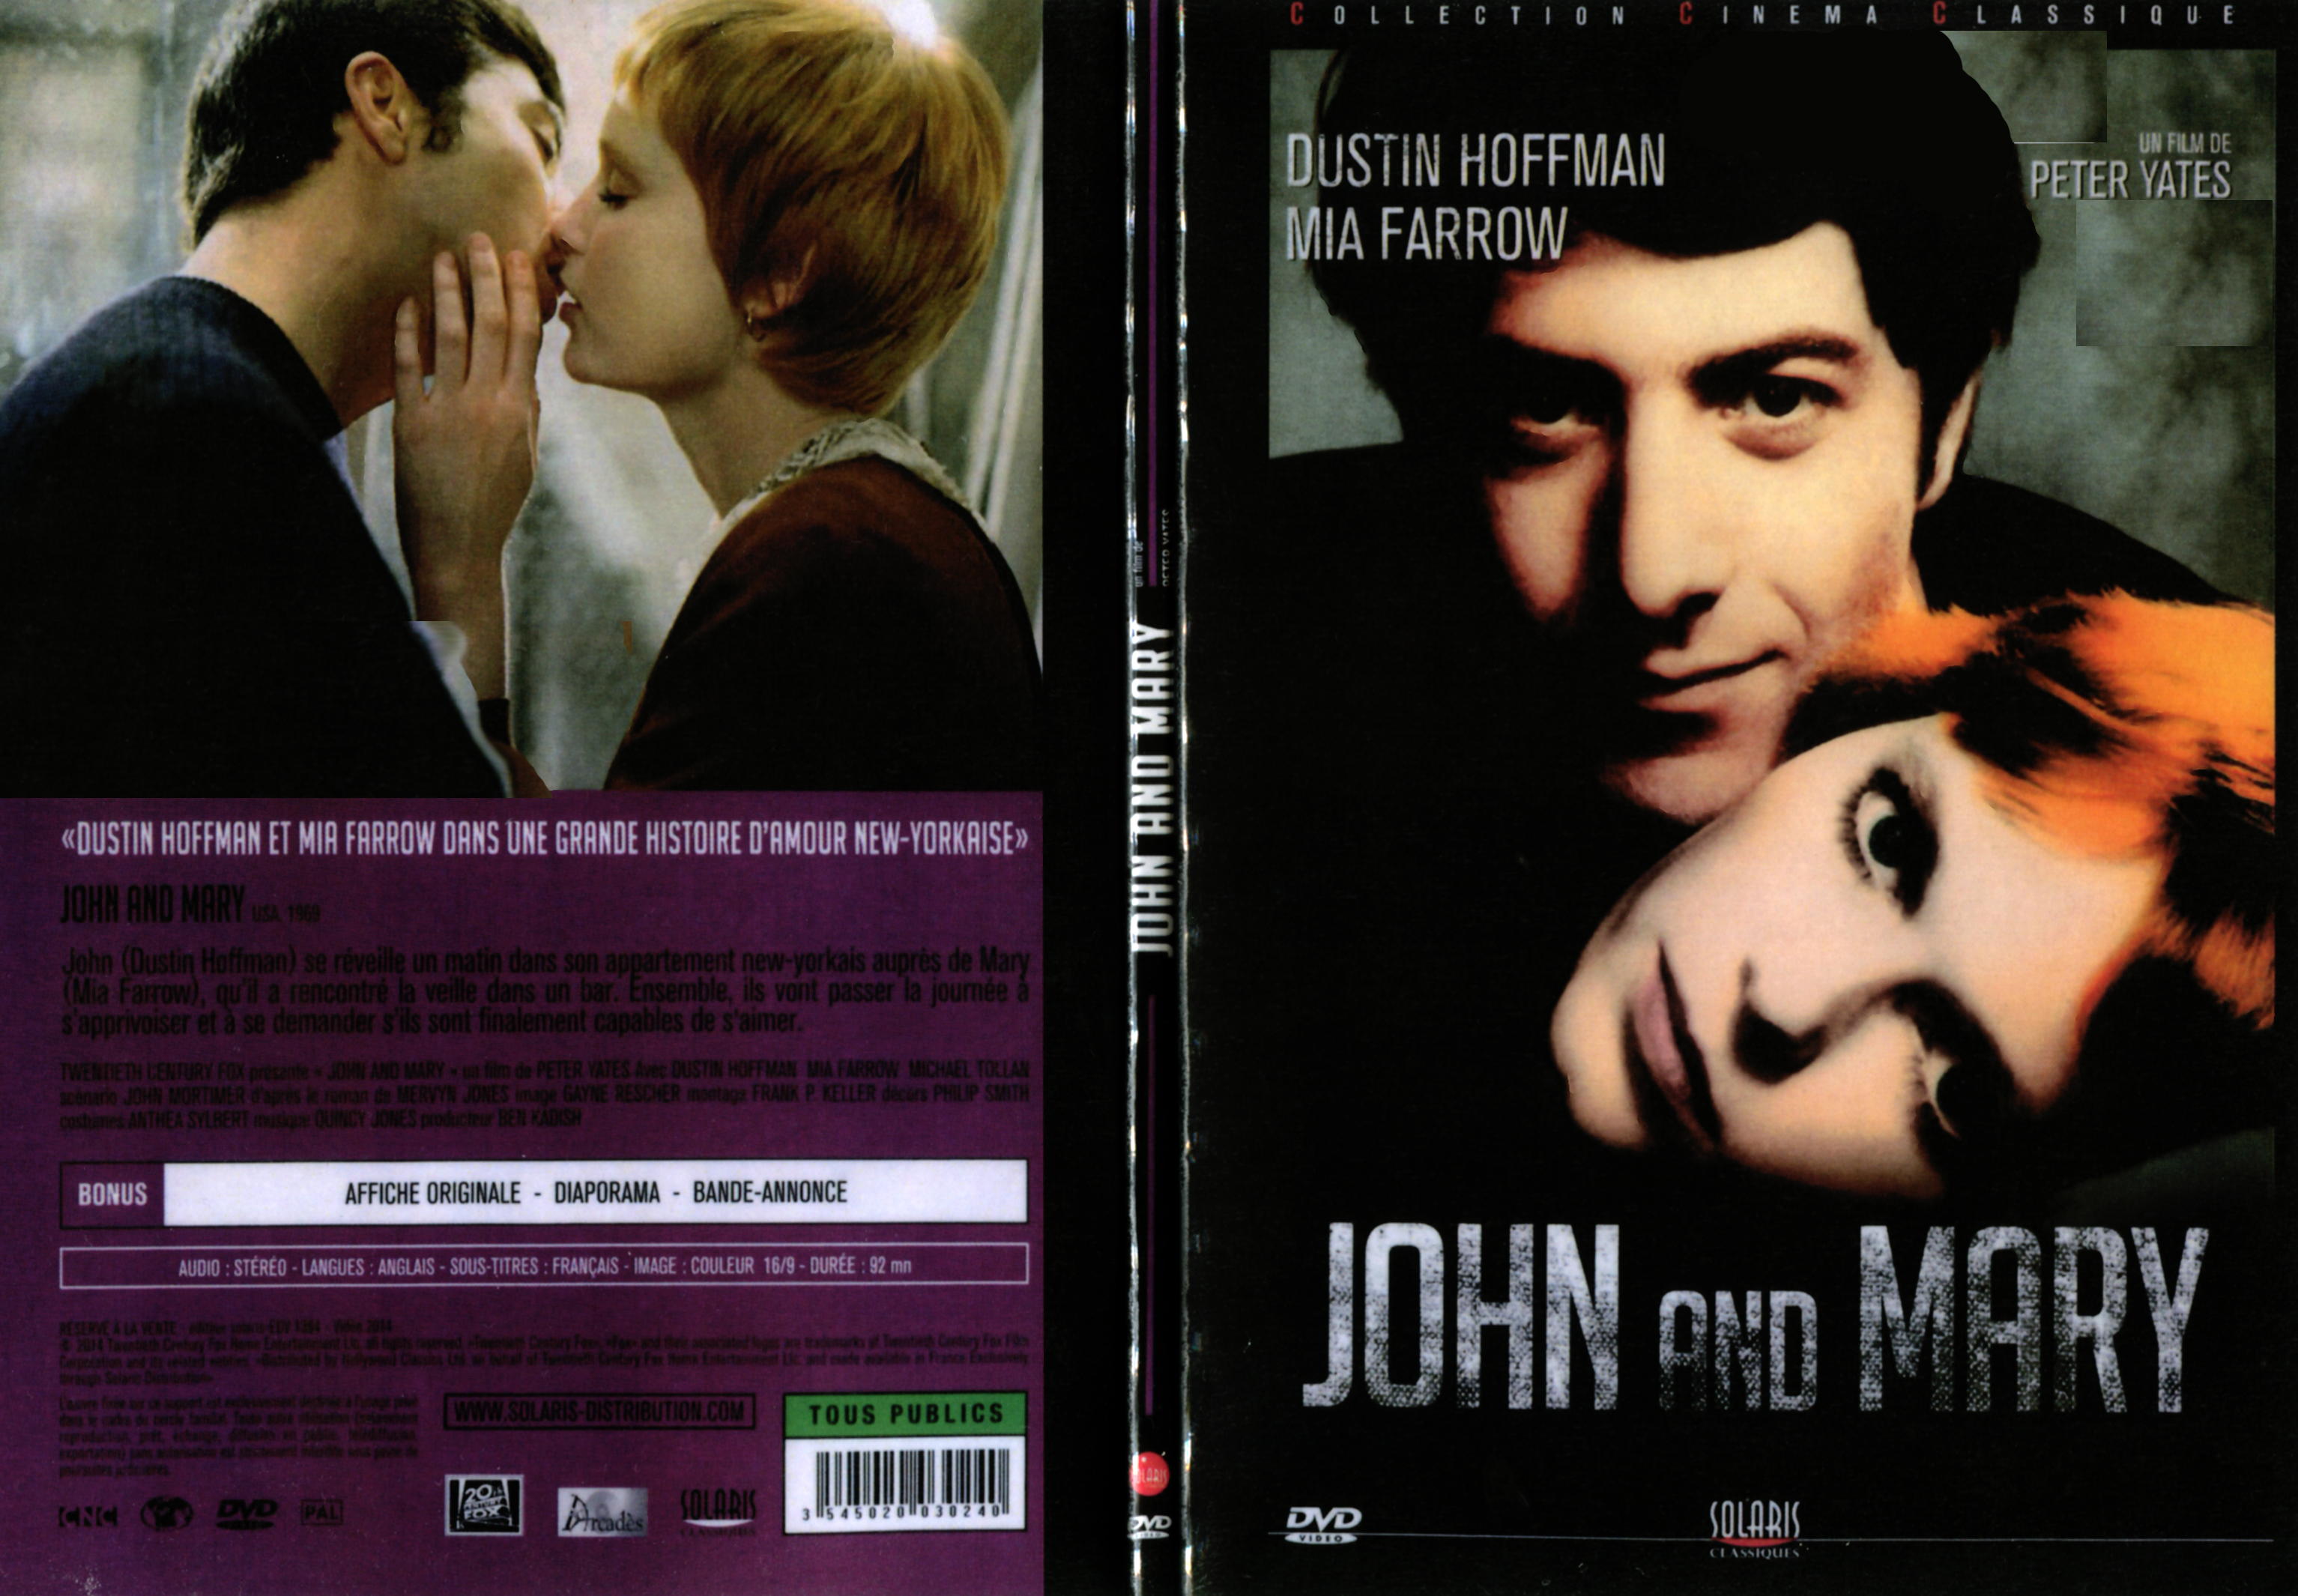 Jaquette DVD John et Mary